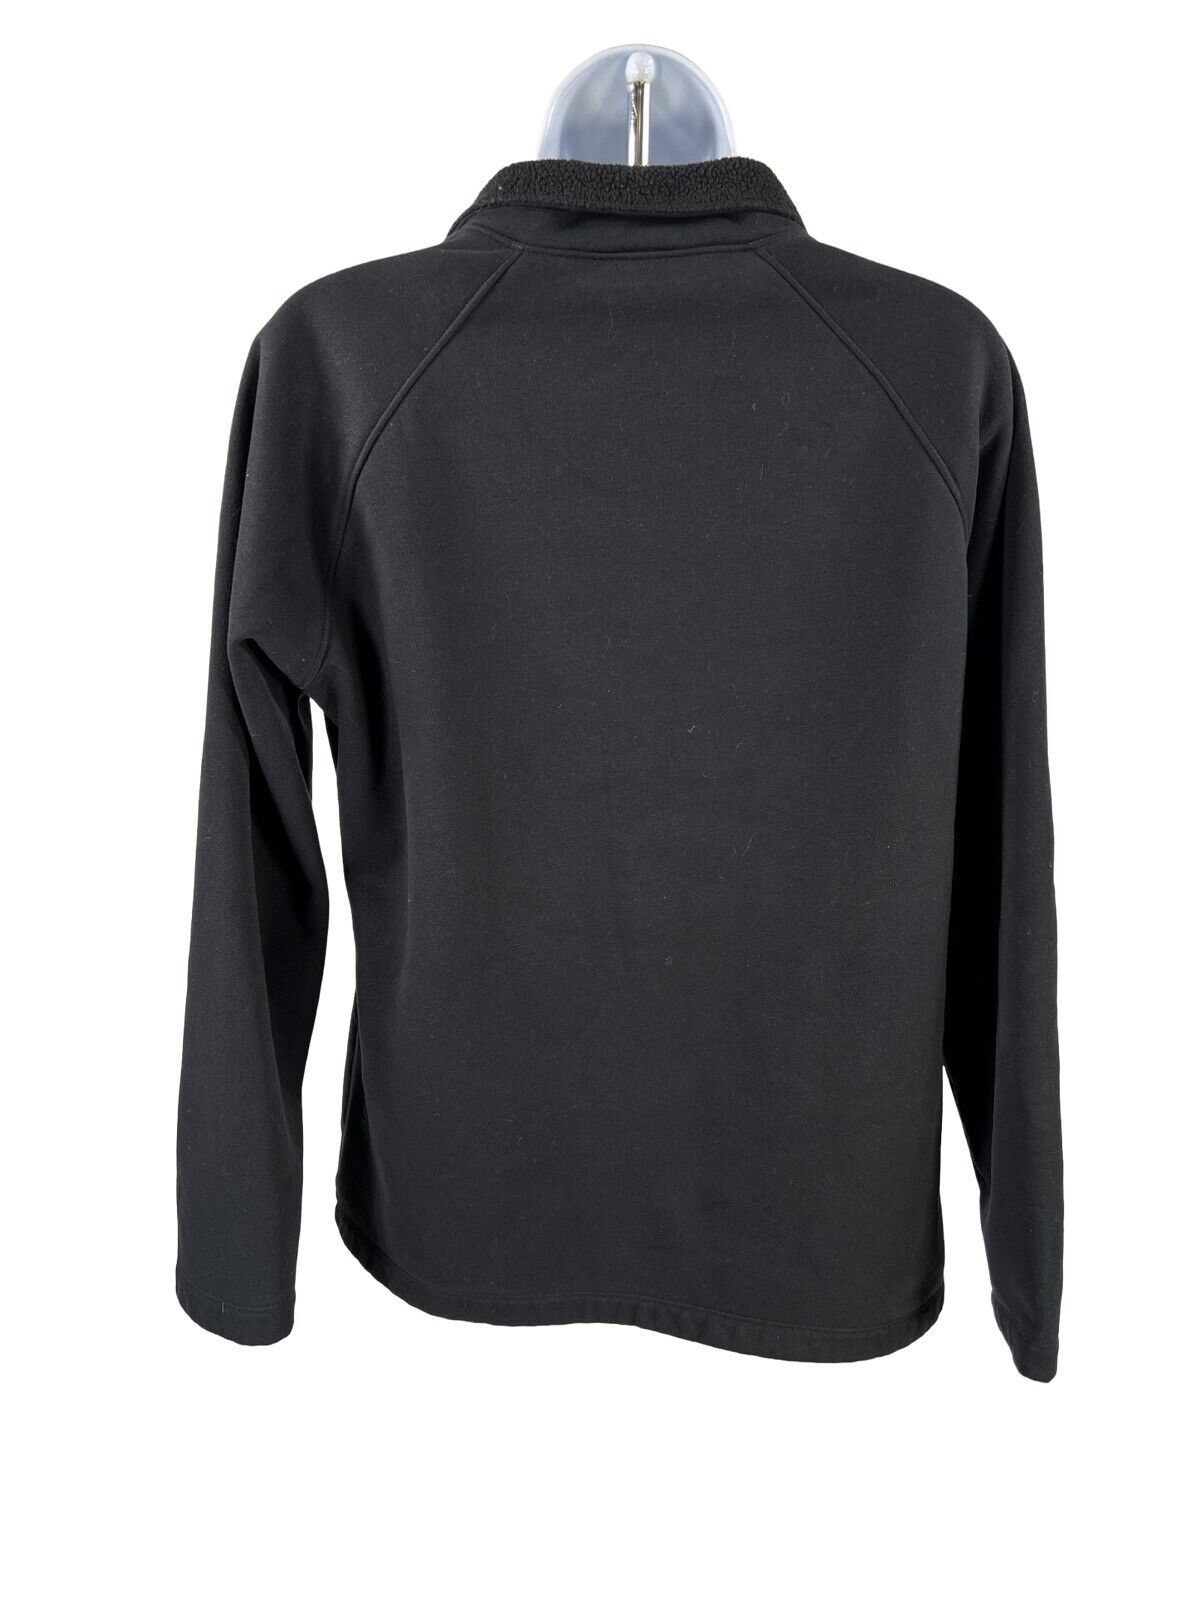 Under Armour Women's Black Long Sleeve 1/2 Zip Pullover Sweatshirt - L